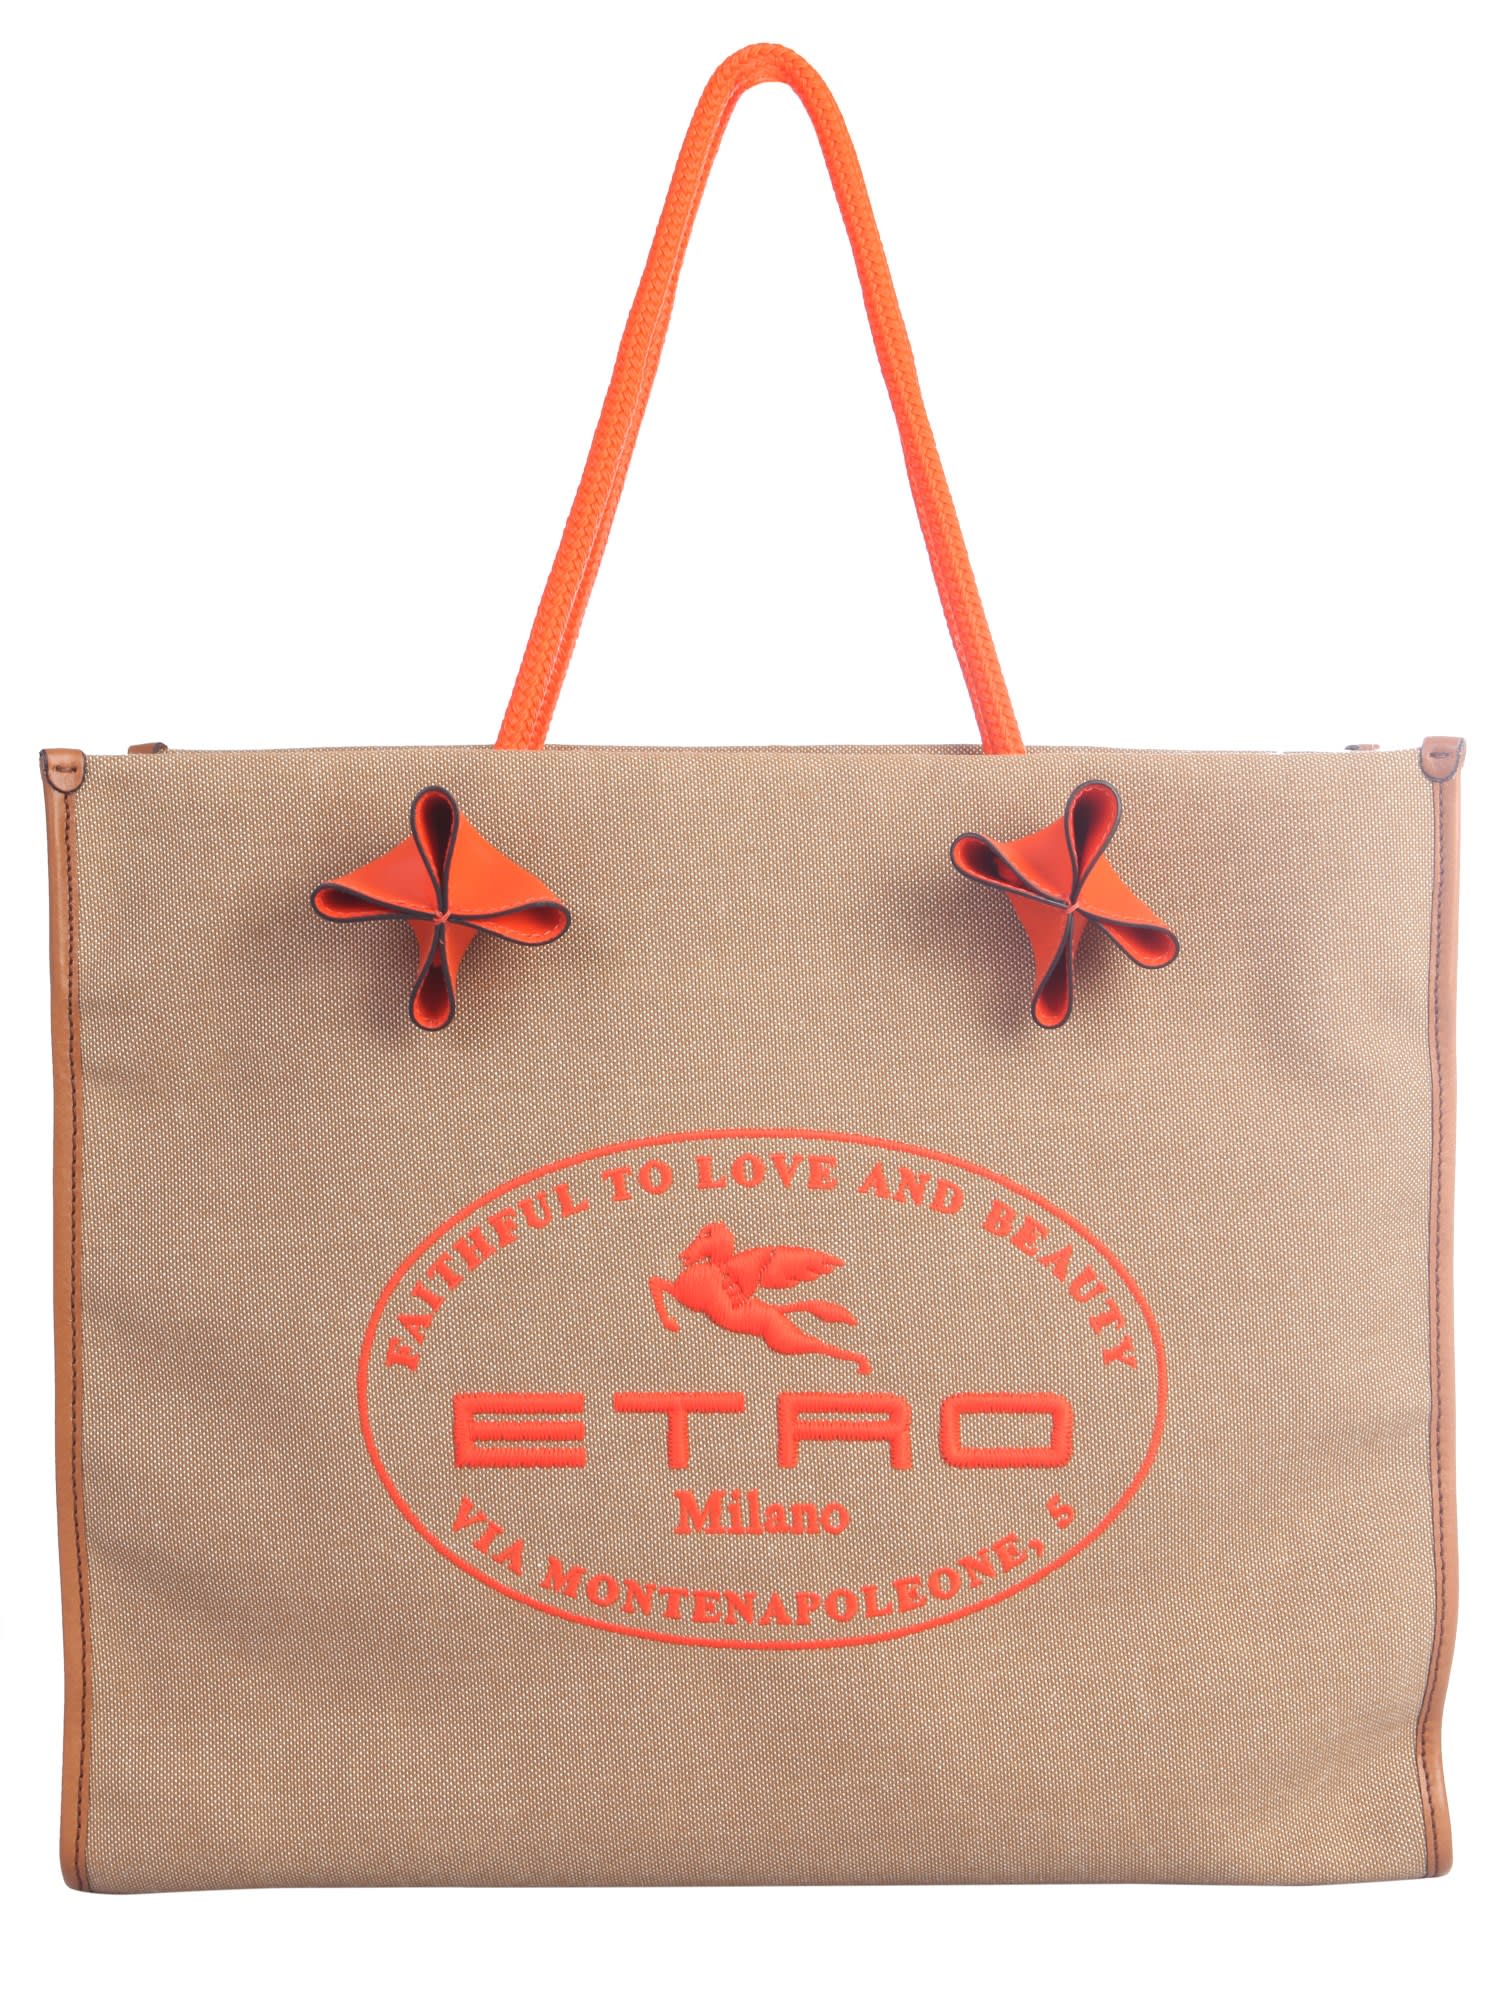 ETRO SHOPPER BAG WITH LOGO,11260147